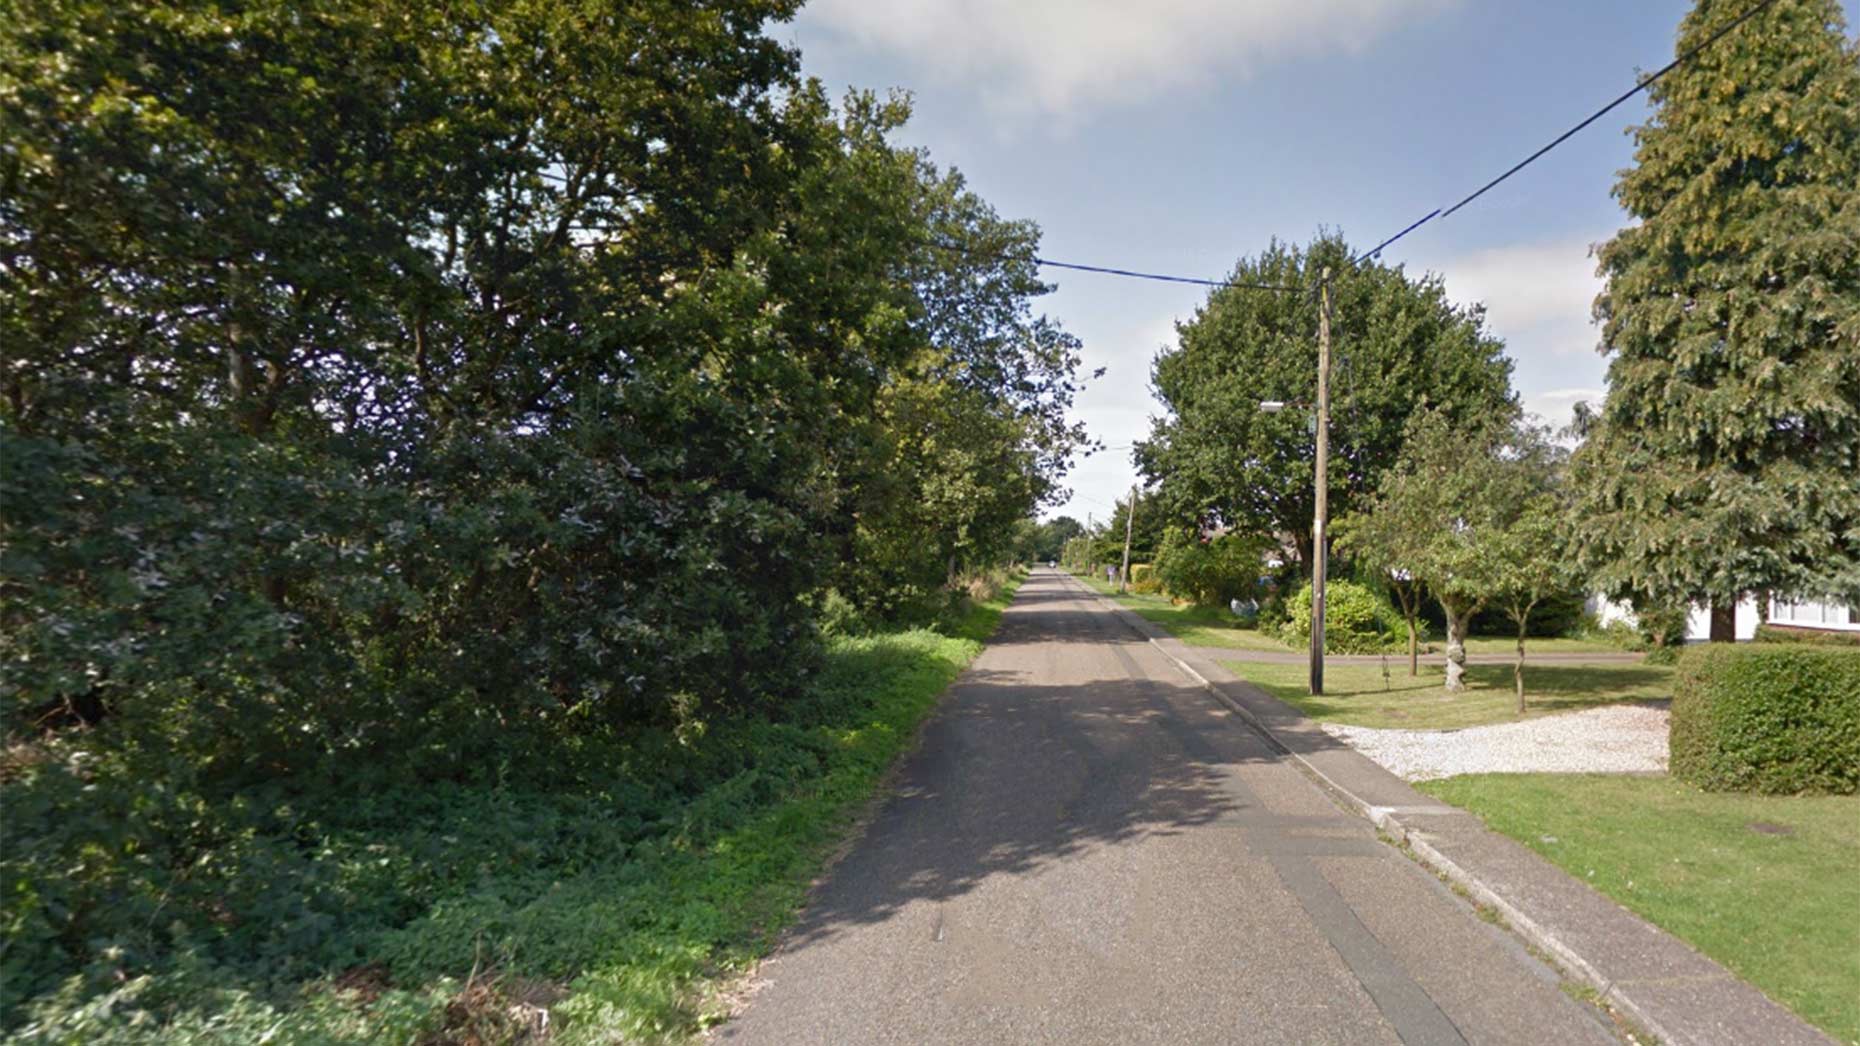 Thorpe Lane in South Hykeham. Photo: Google Street View